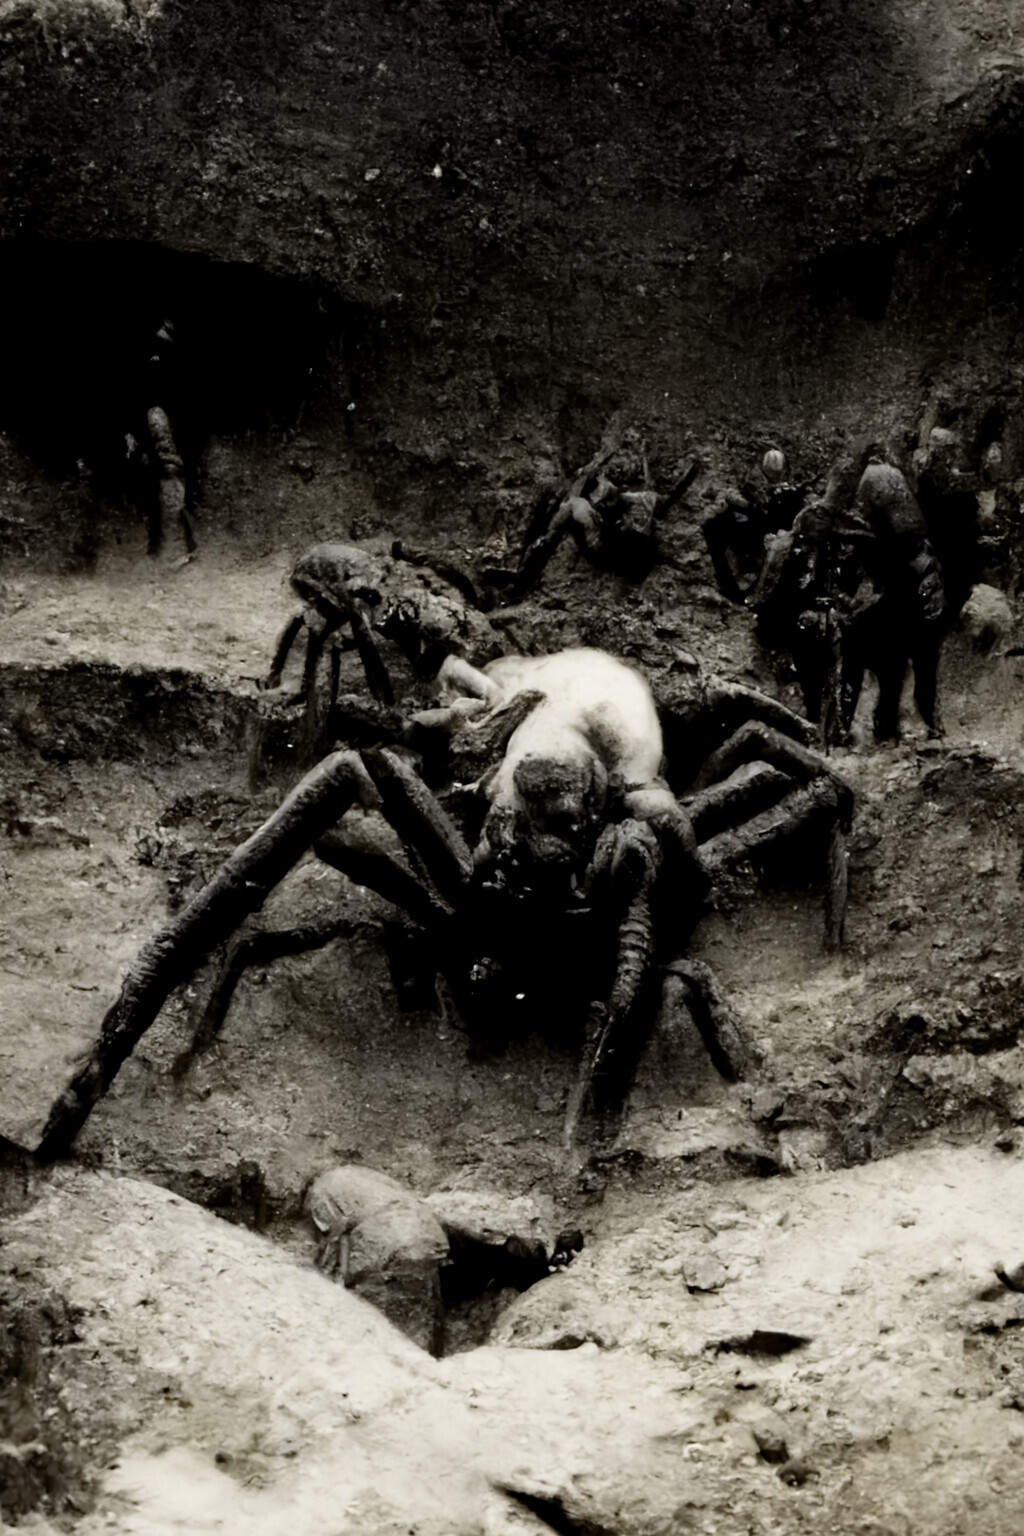 Trench Beast
c. 1888
Photograph